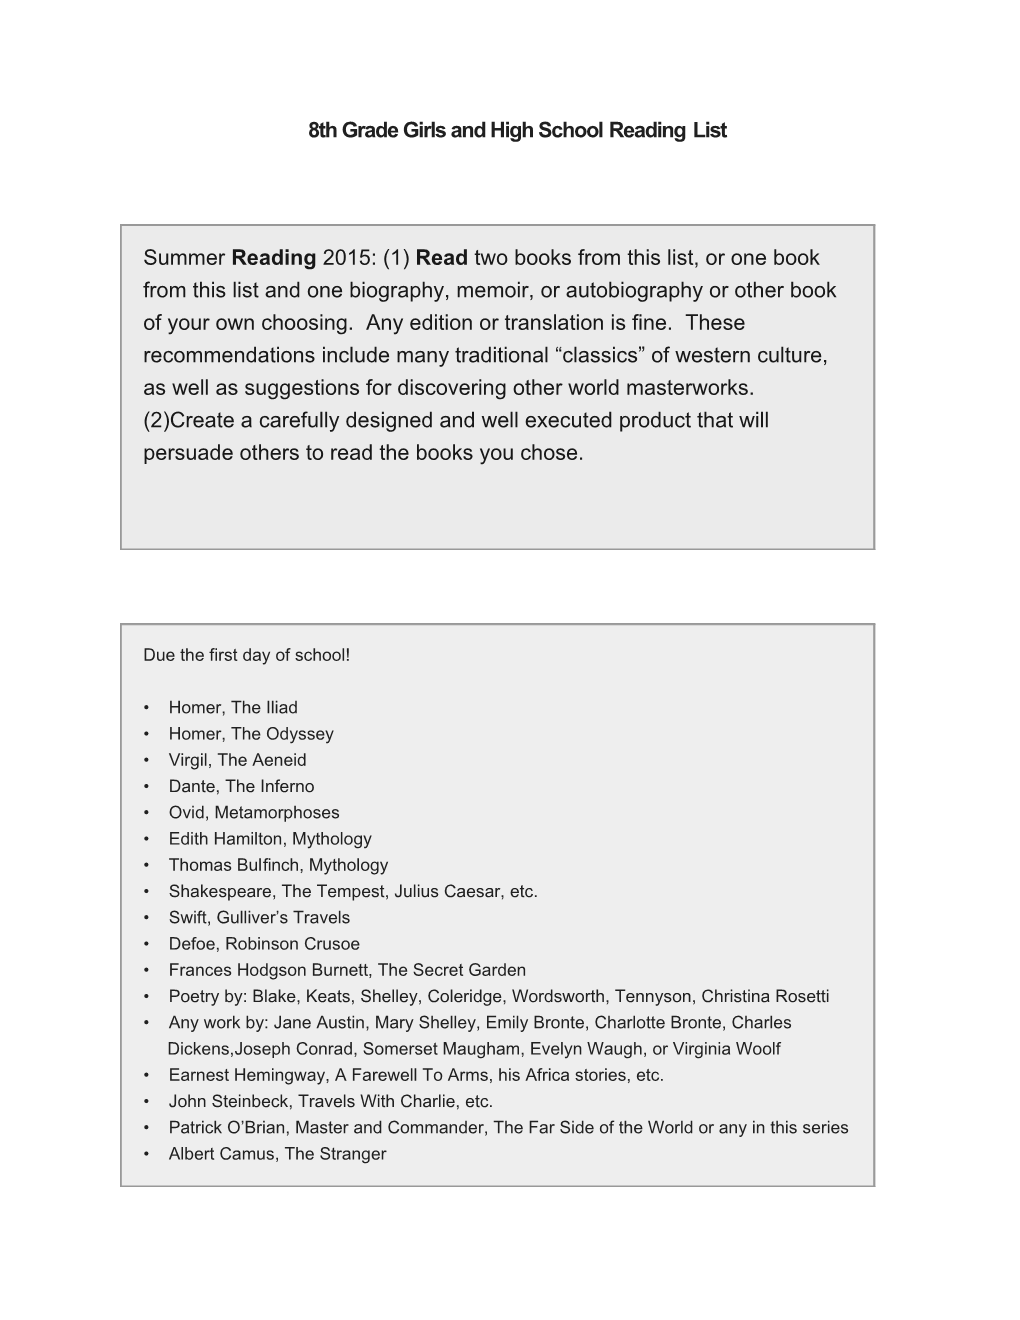 8Th Grade Girls and High School Reading List Summer Reading 2015